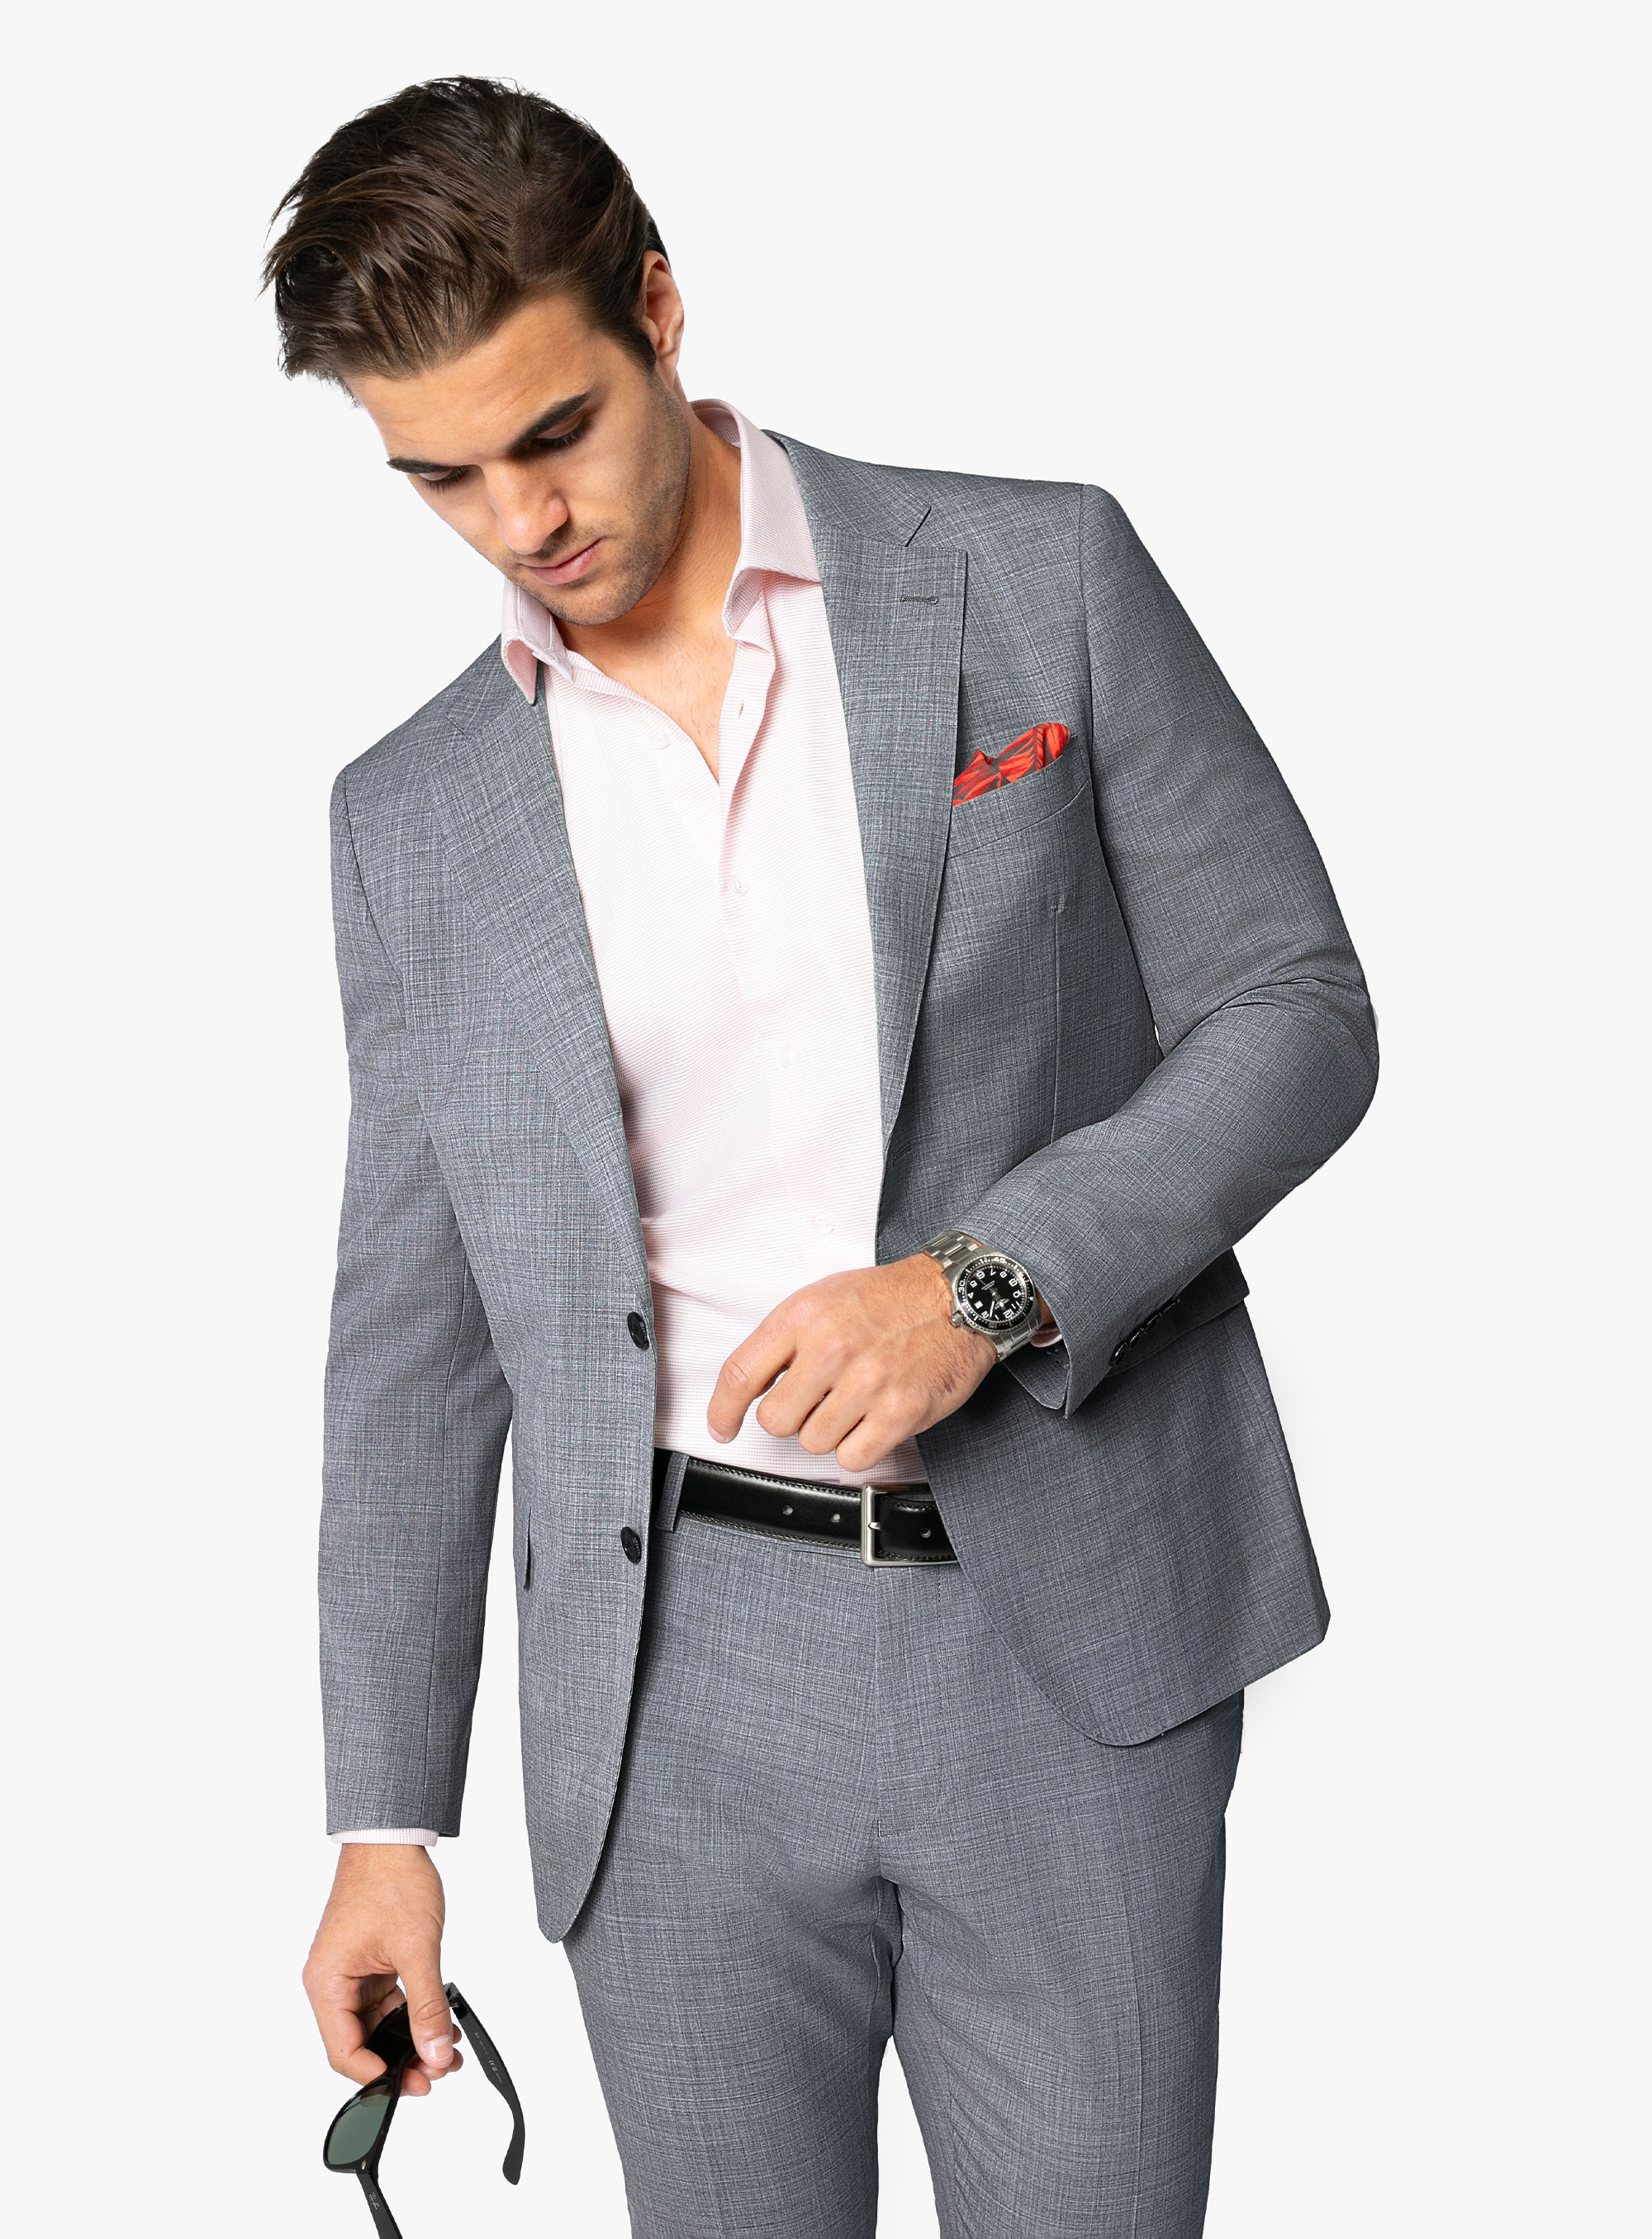 Men's Beach Wedding Attire Suit Menswear Light Gray $199